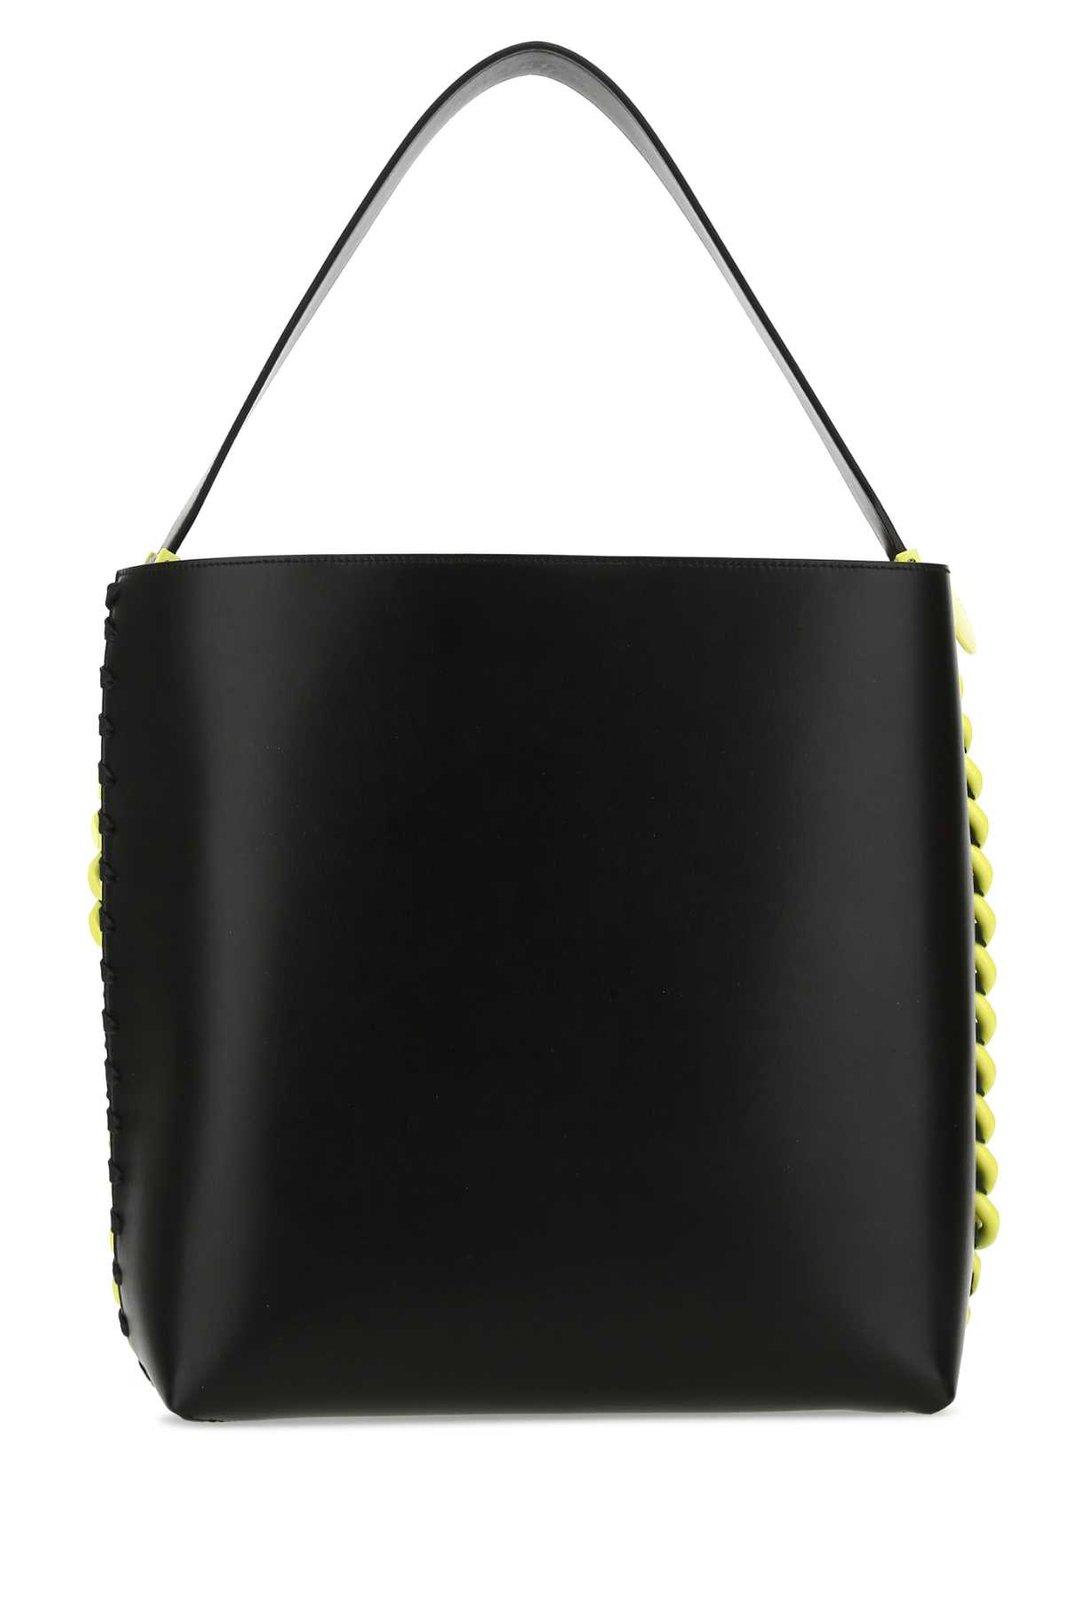 Stella McCartney Frayme Chain-trimmed Top Handle Bag